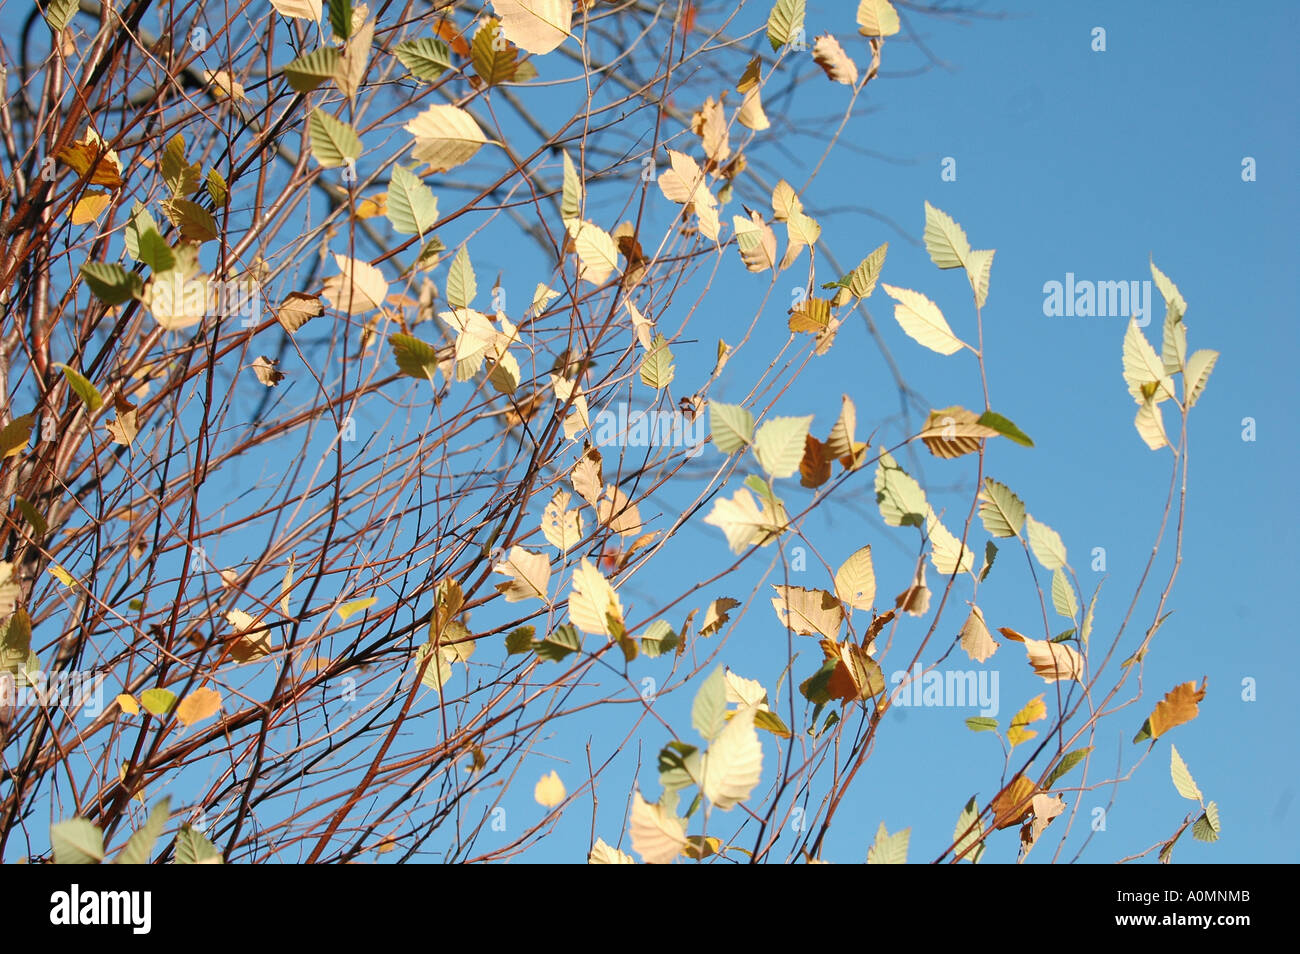 Autumn Leaves against a clear blue sky Stock Photo